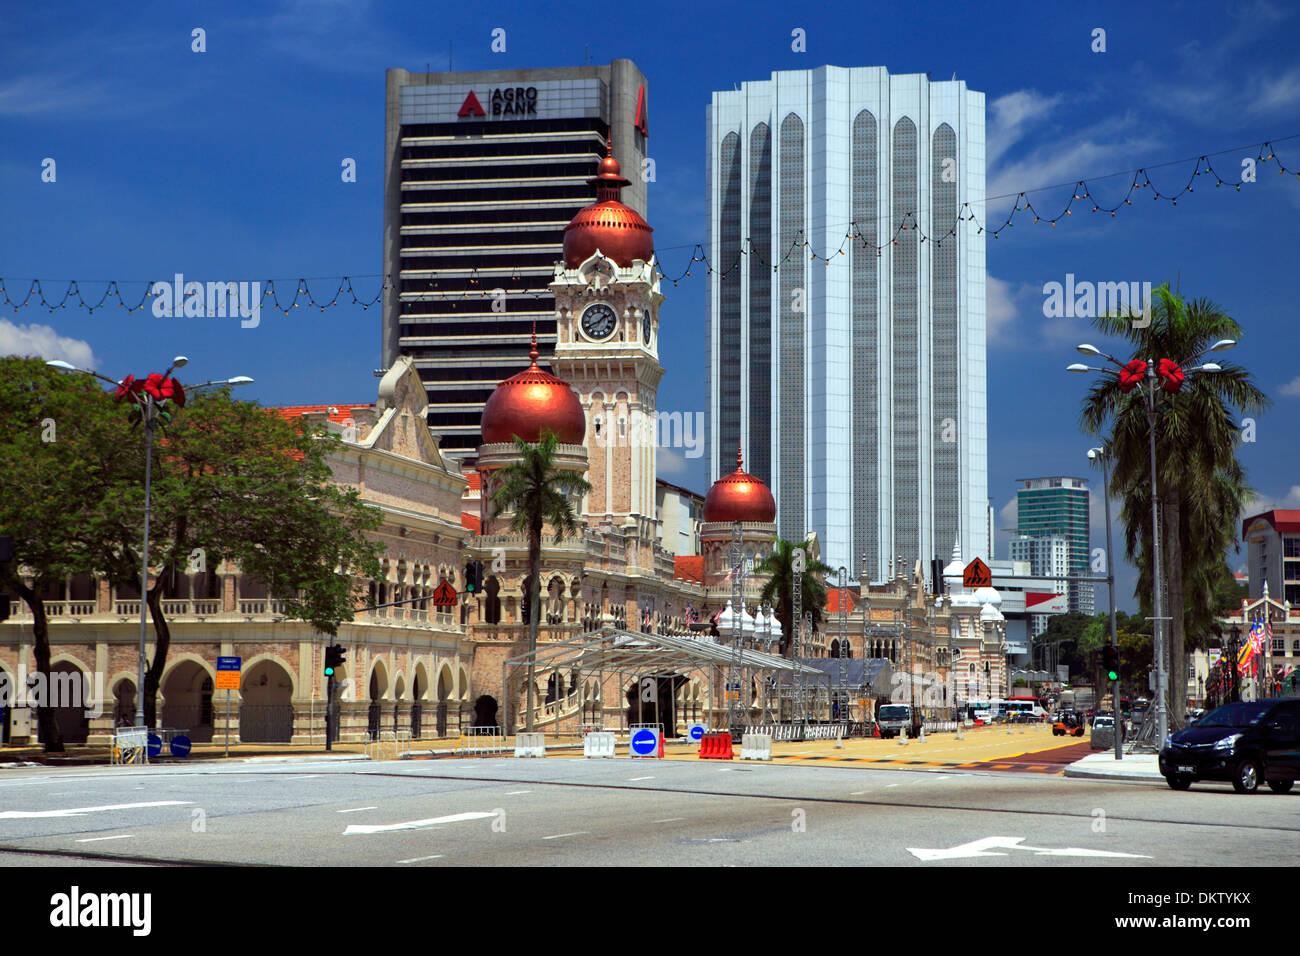 Sultan Abdul Samad Building, Merdeka square, Kuala Lumpur, Malaysia Stock Photo